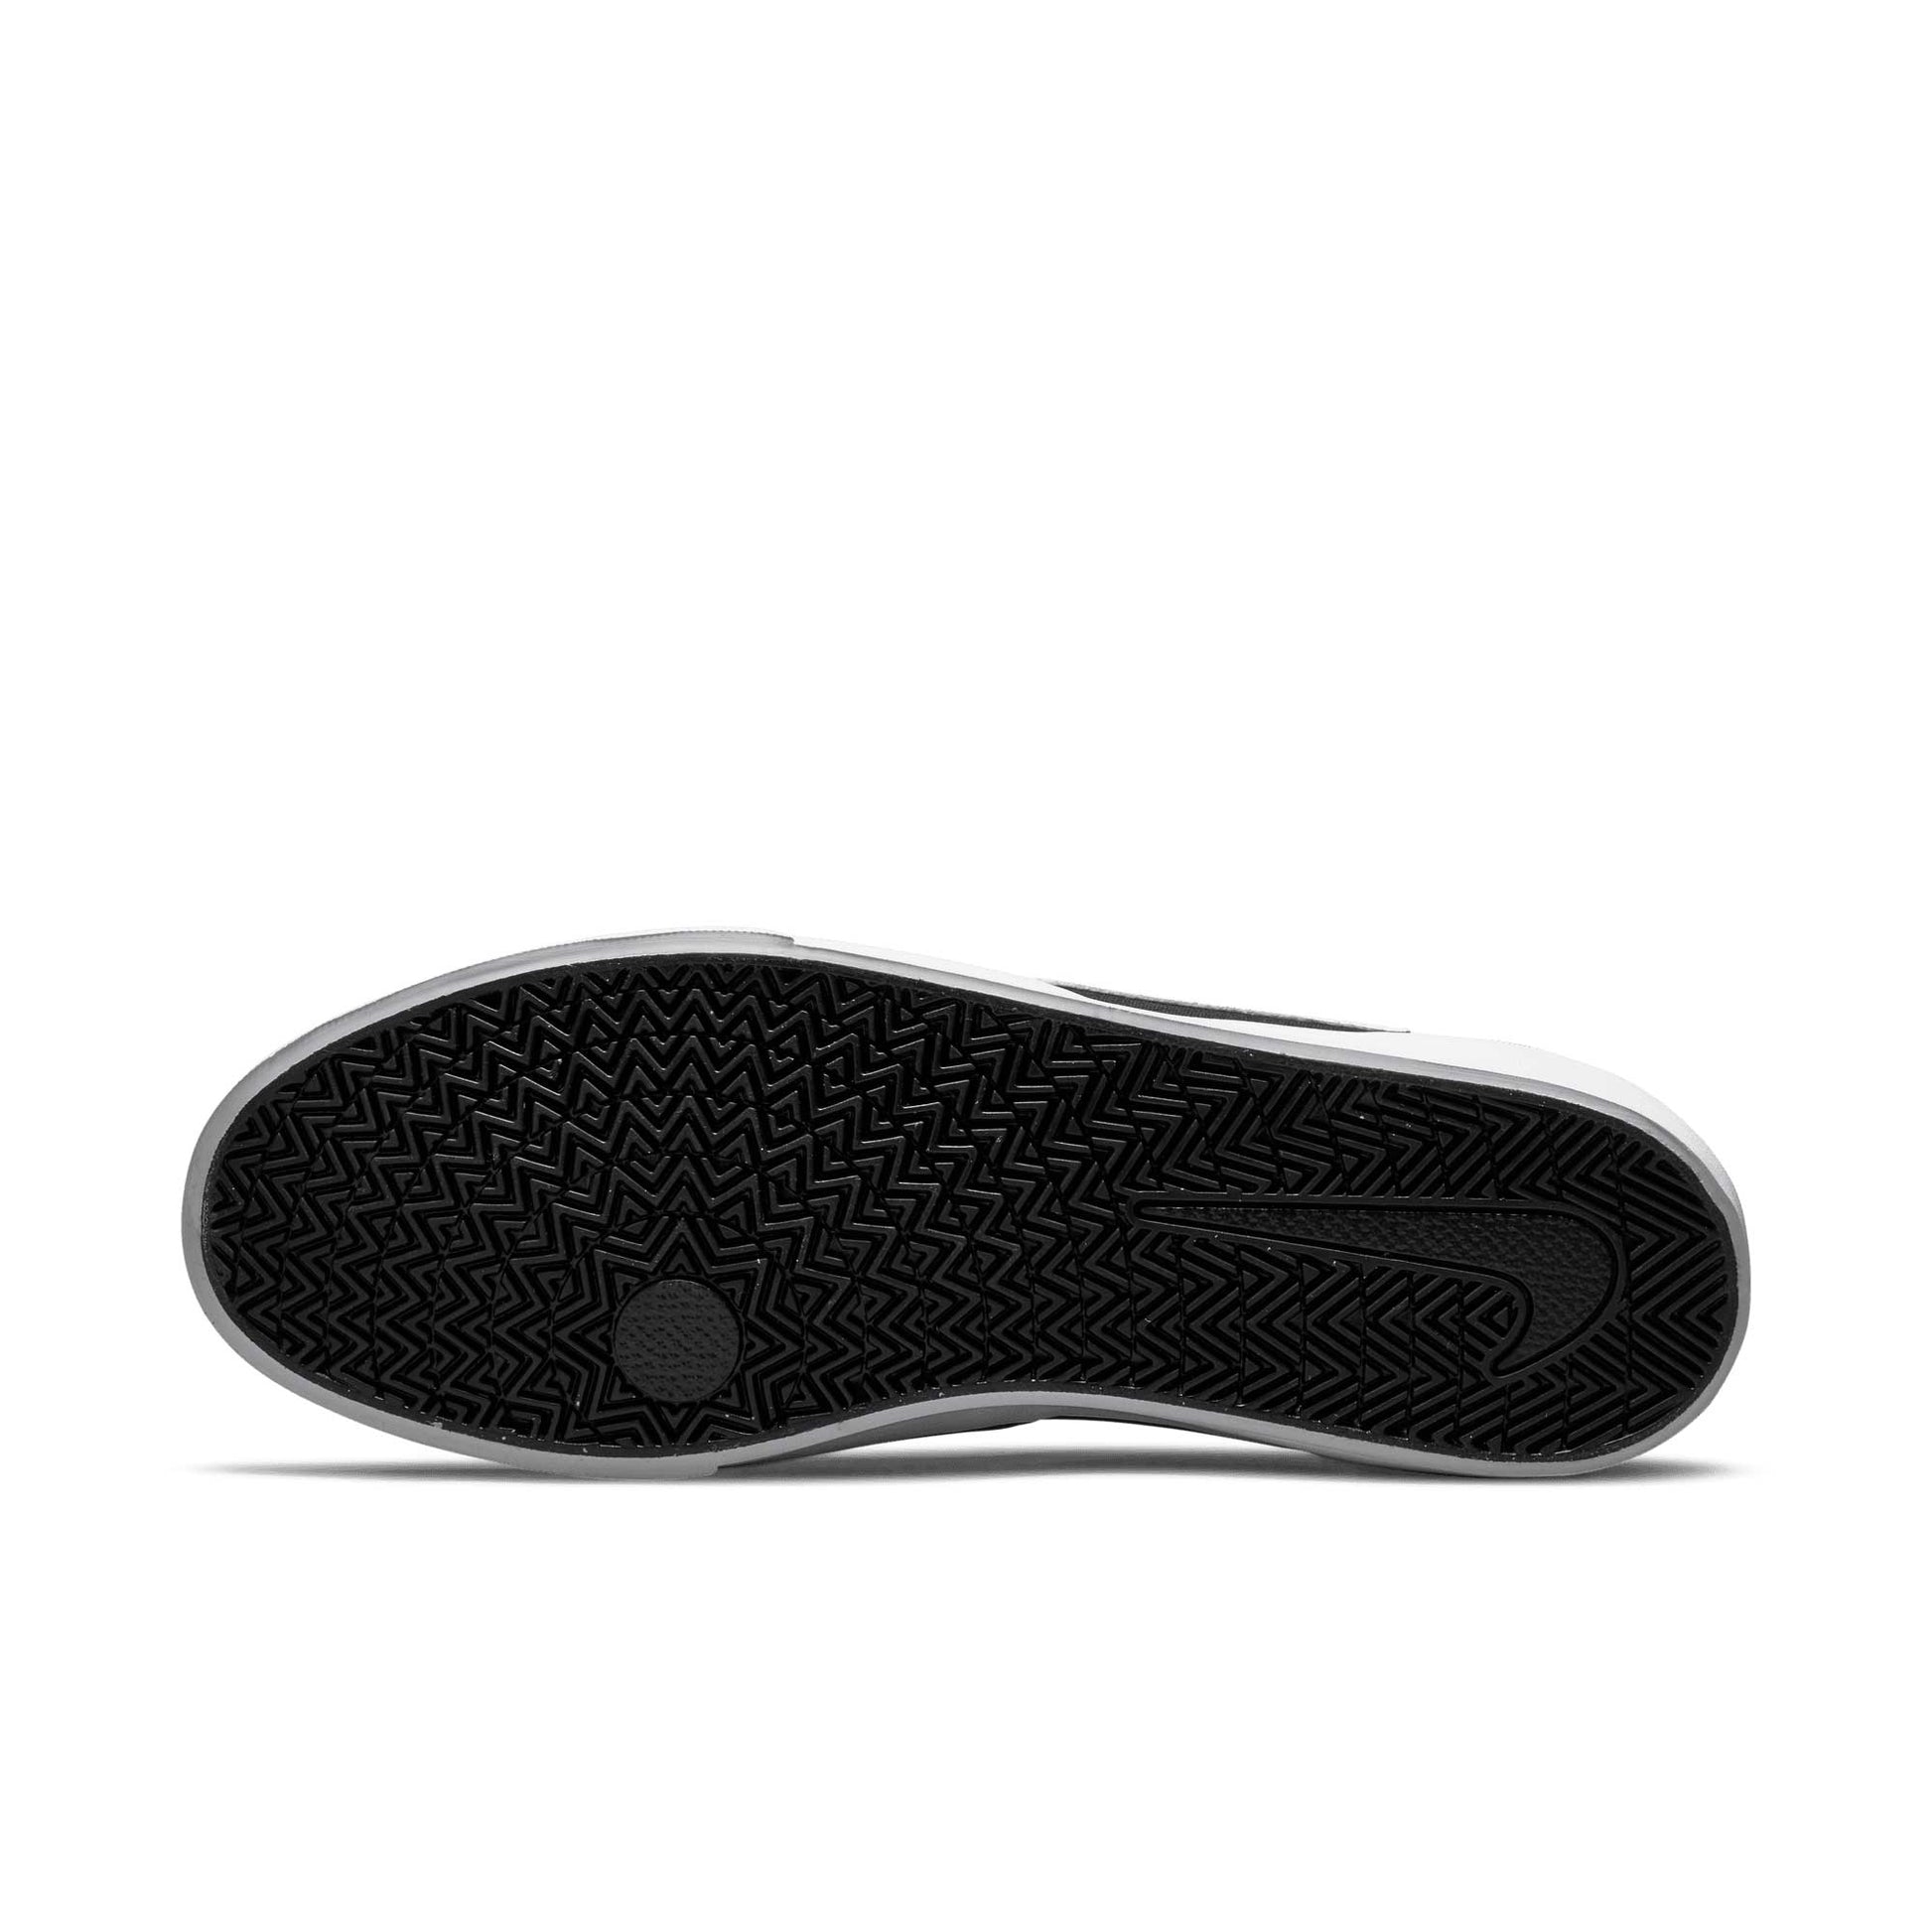 Nike SB Chron 2, black/white-black - Tiki Room Skateboards - 4